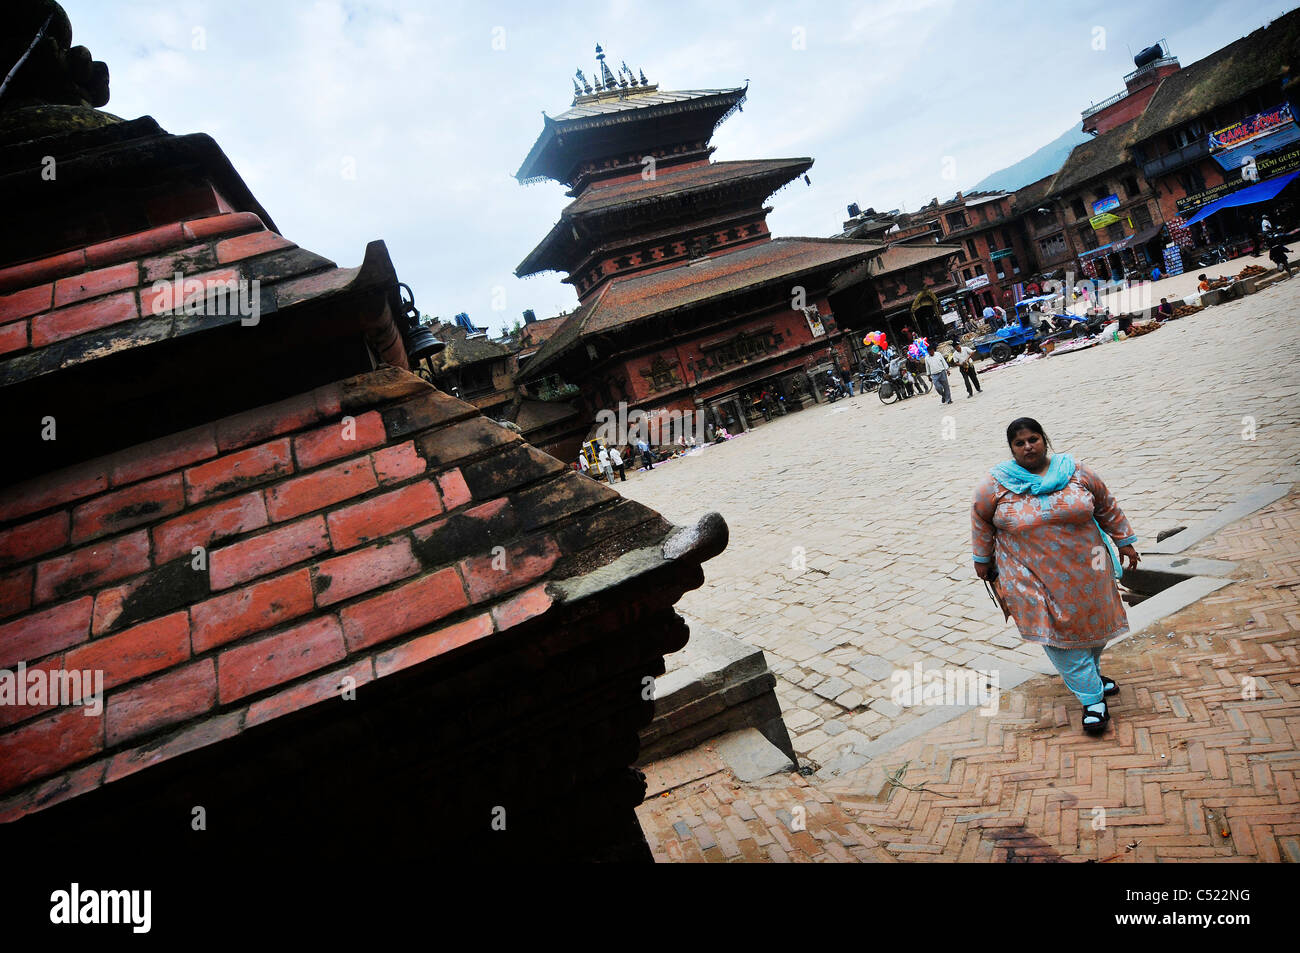 A scene in Bhaktapur, Nepal. Stock Photo